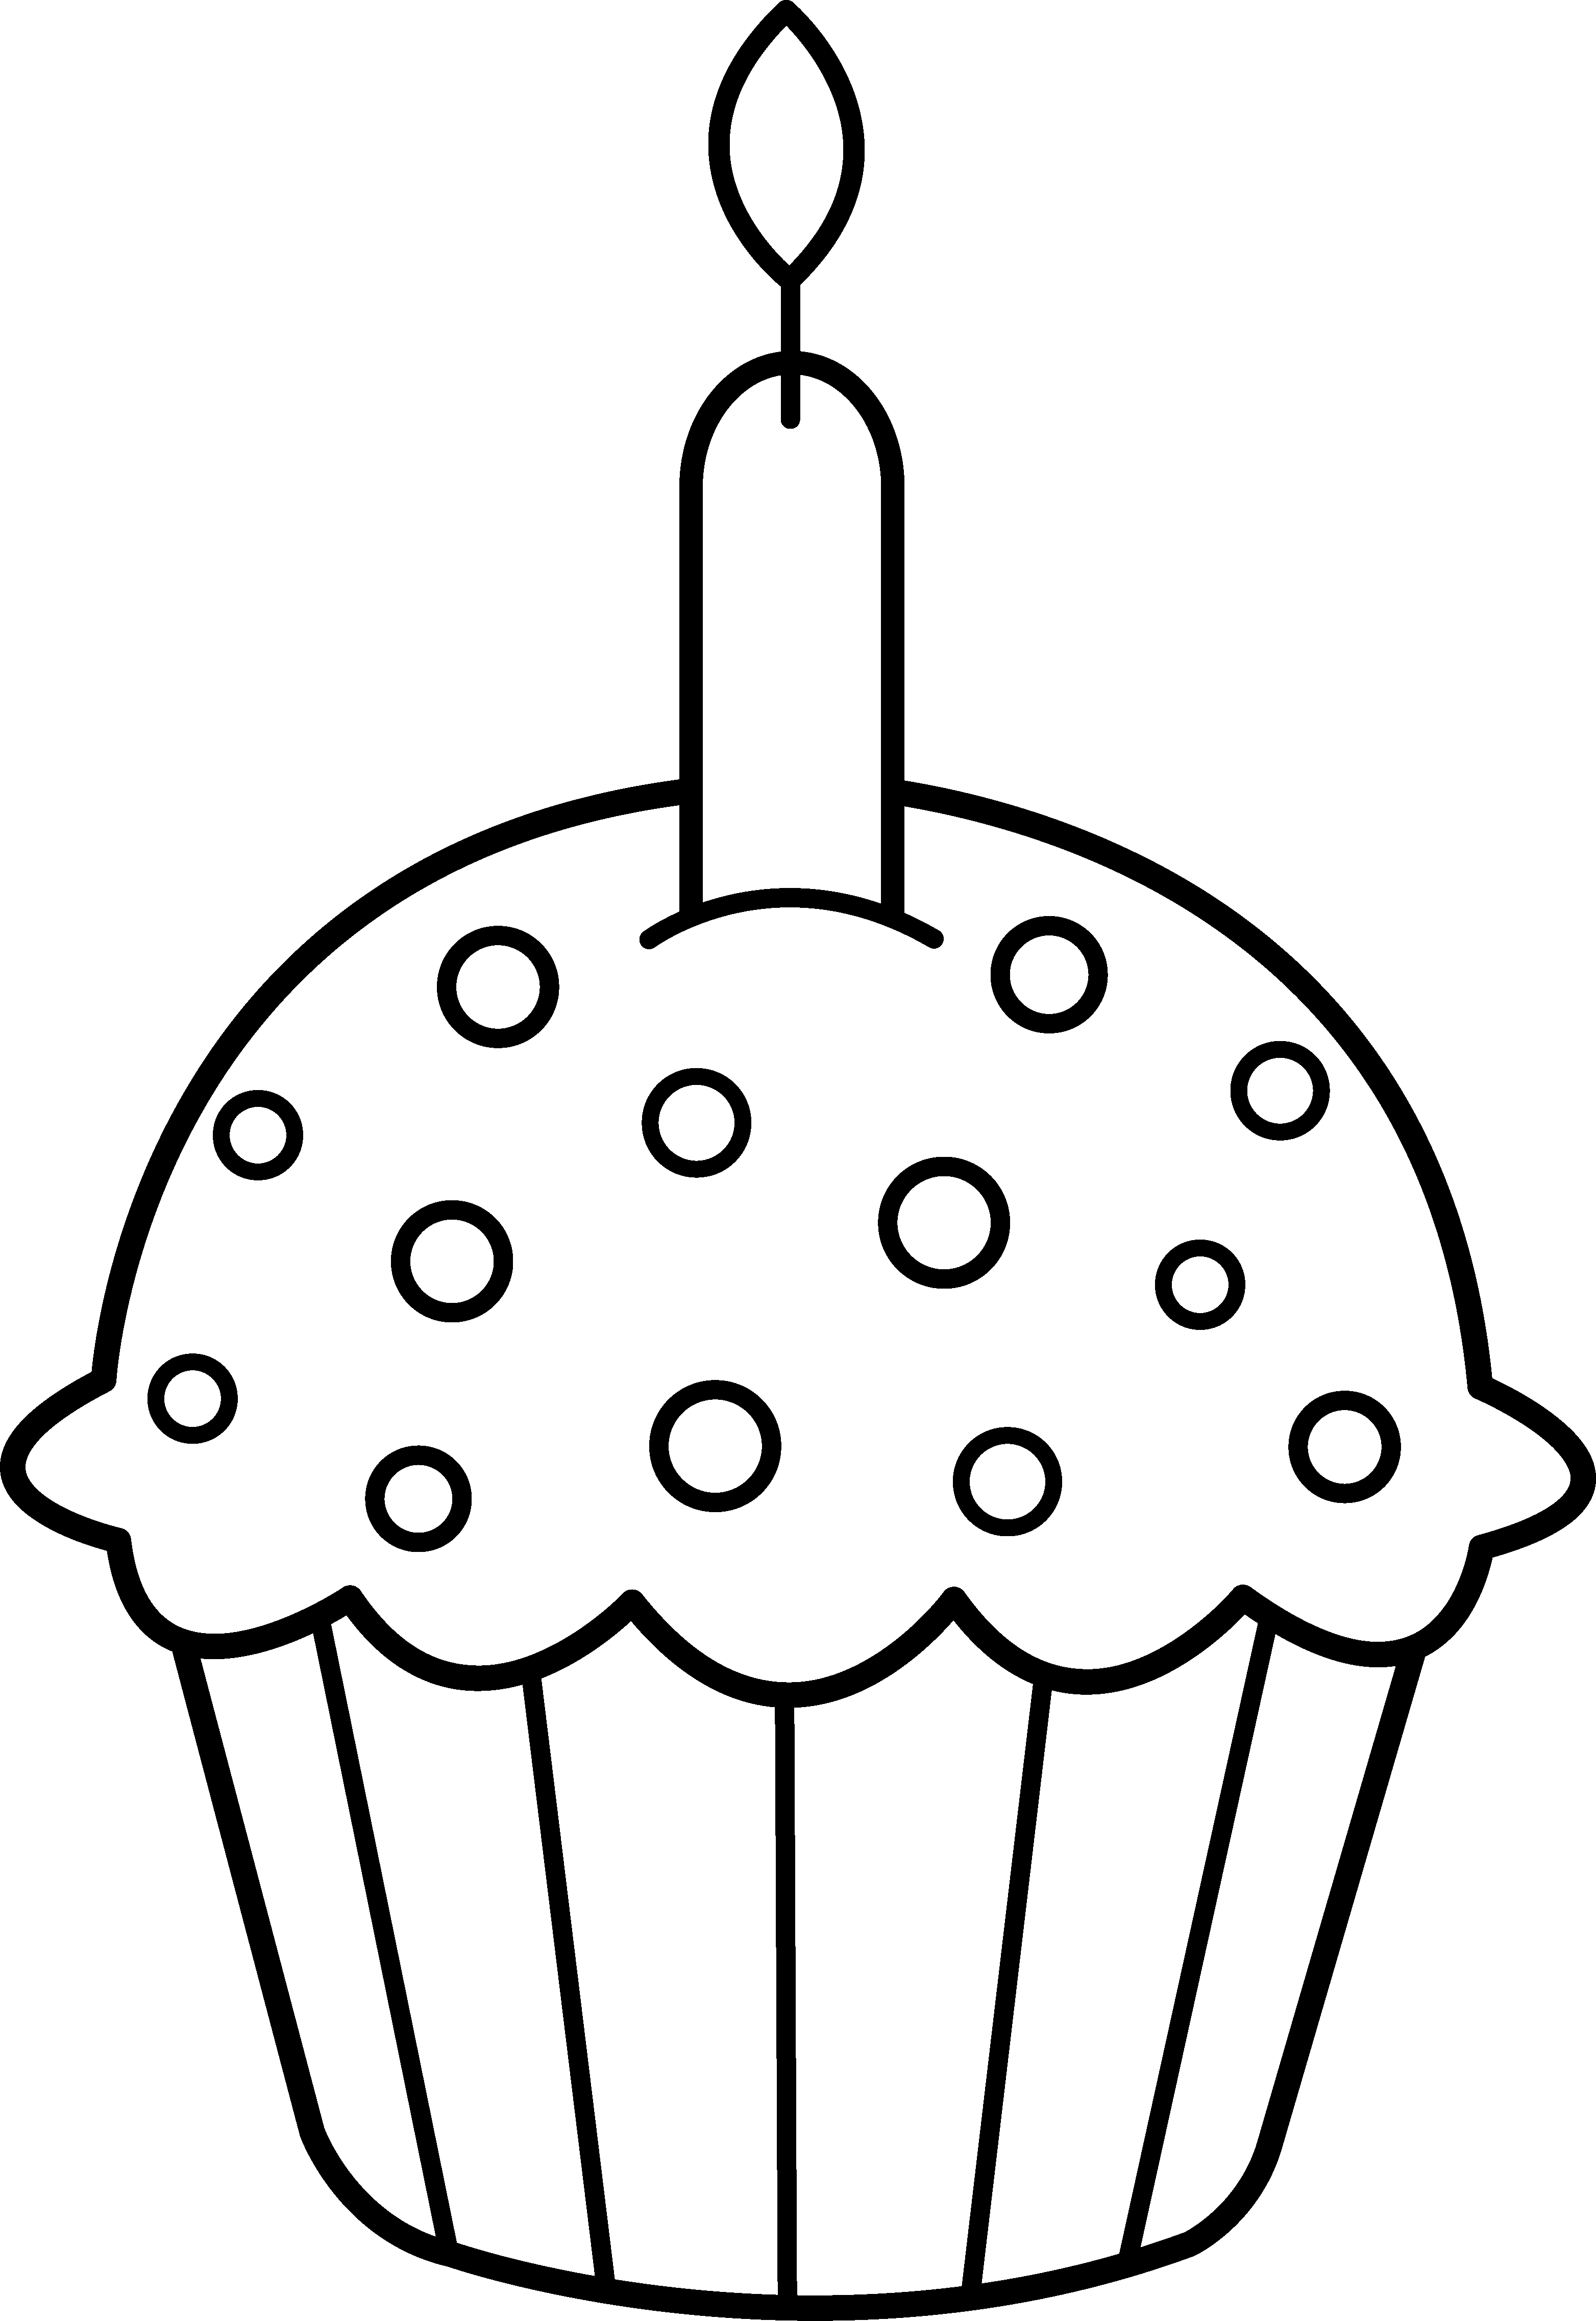 11 Pics of Birthday Cupcake Coloring Pages Printable - Cupcake ...